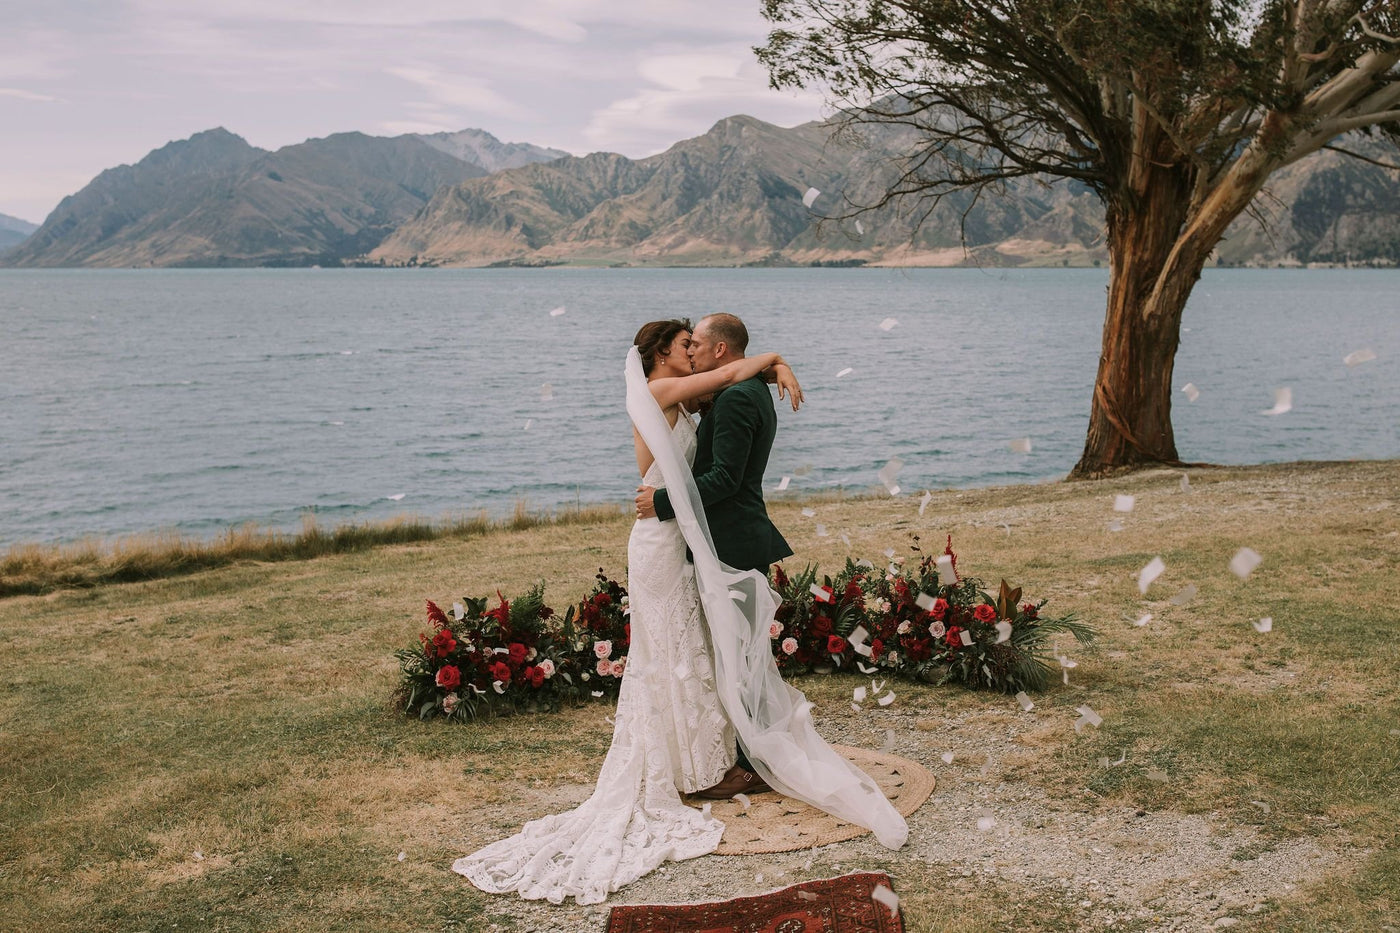 FEATURE WEDDING || Joe + Janelle's Lake Side Love - The Green Room Flower Company